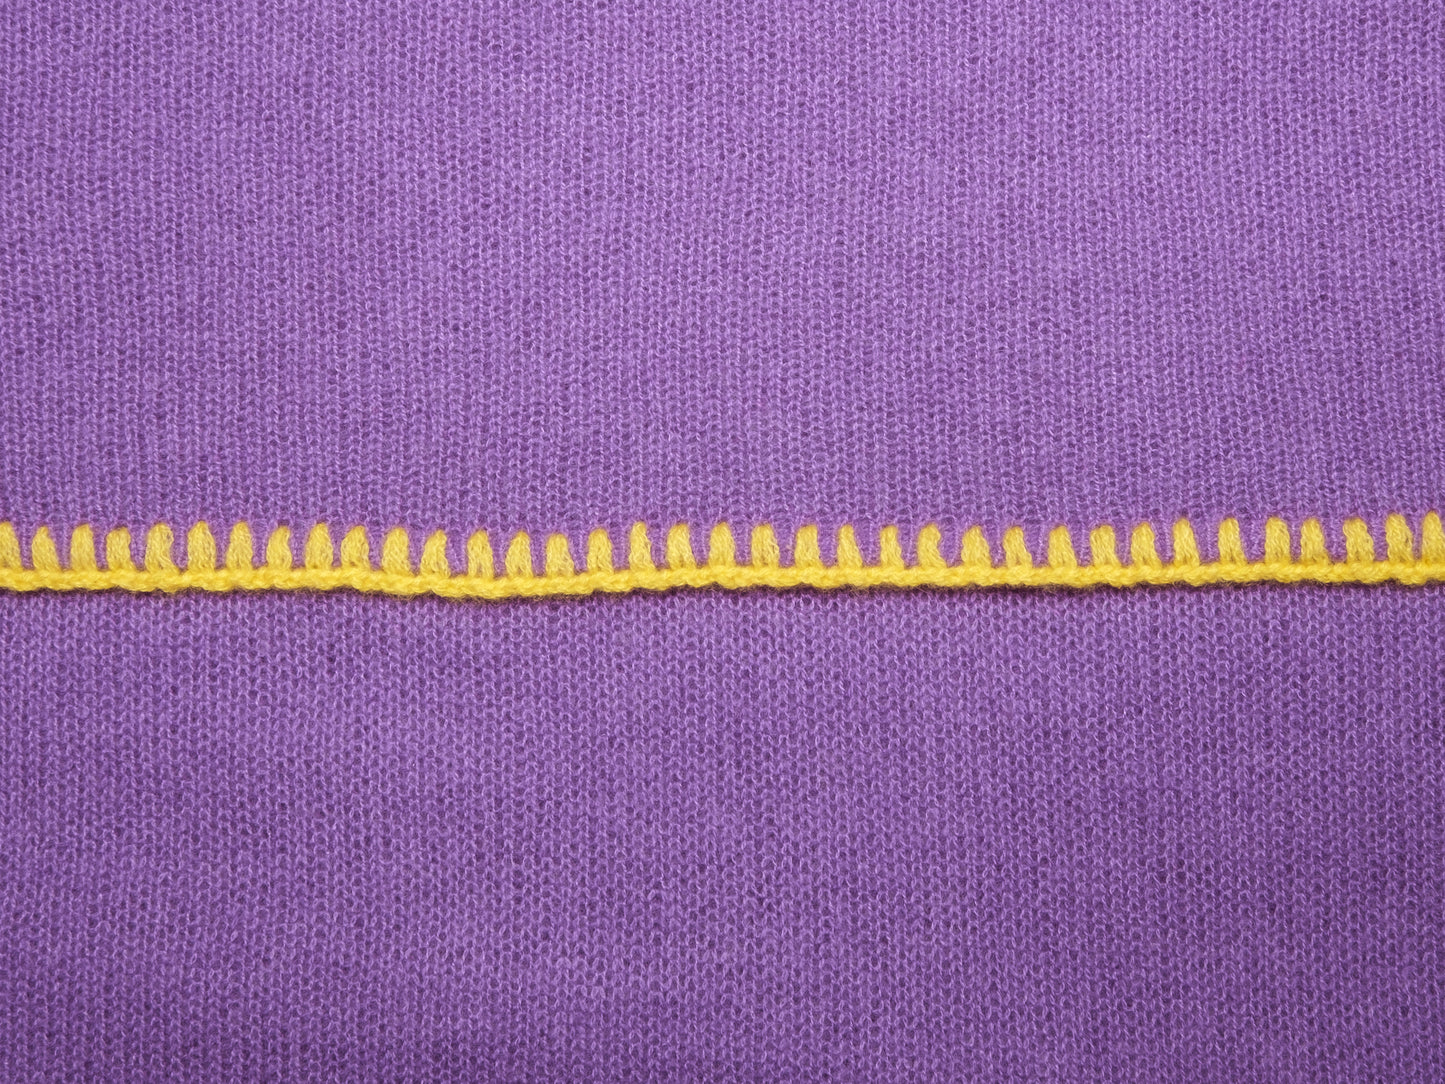 Schal Horsestitch Ultra Violet mit Kontrastnaht in Yellow